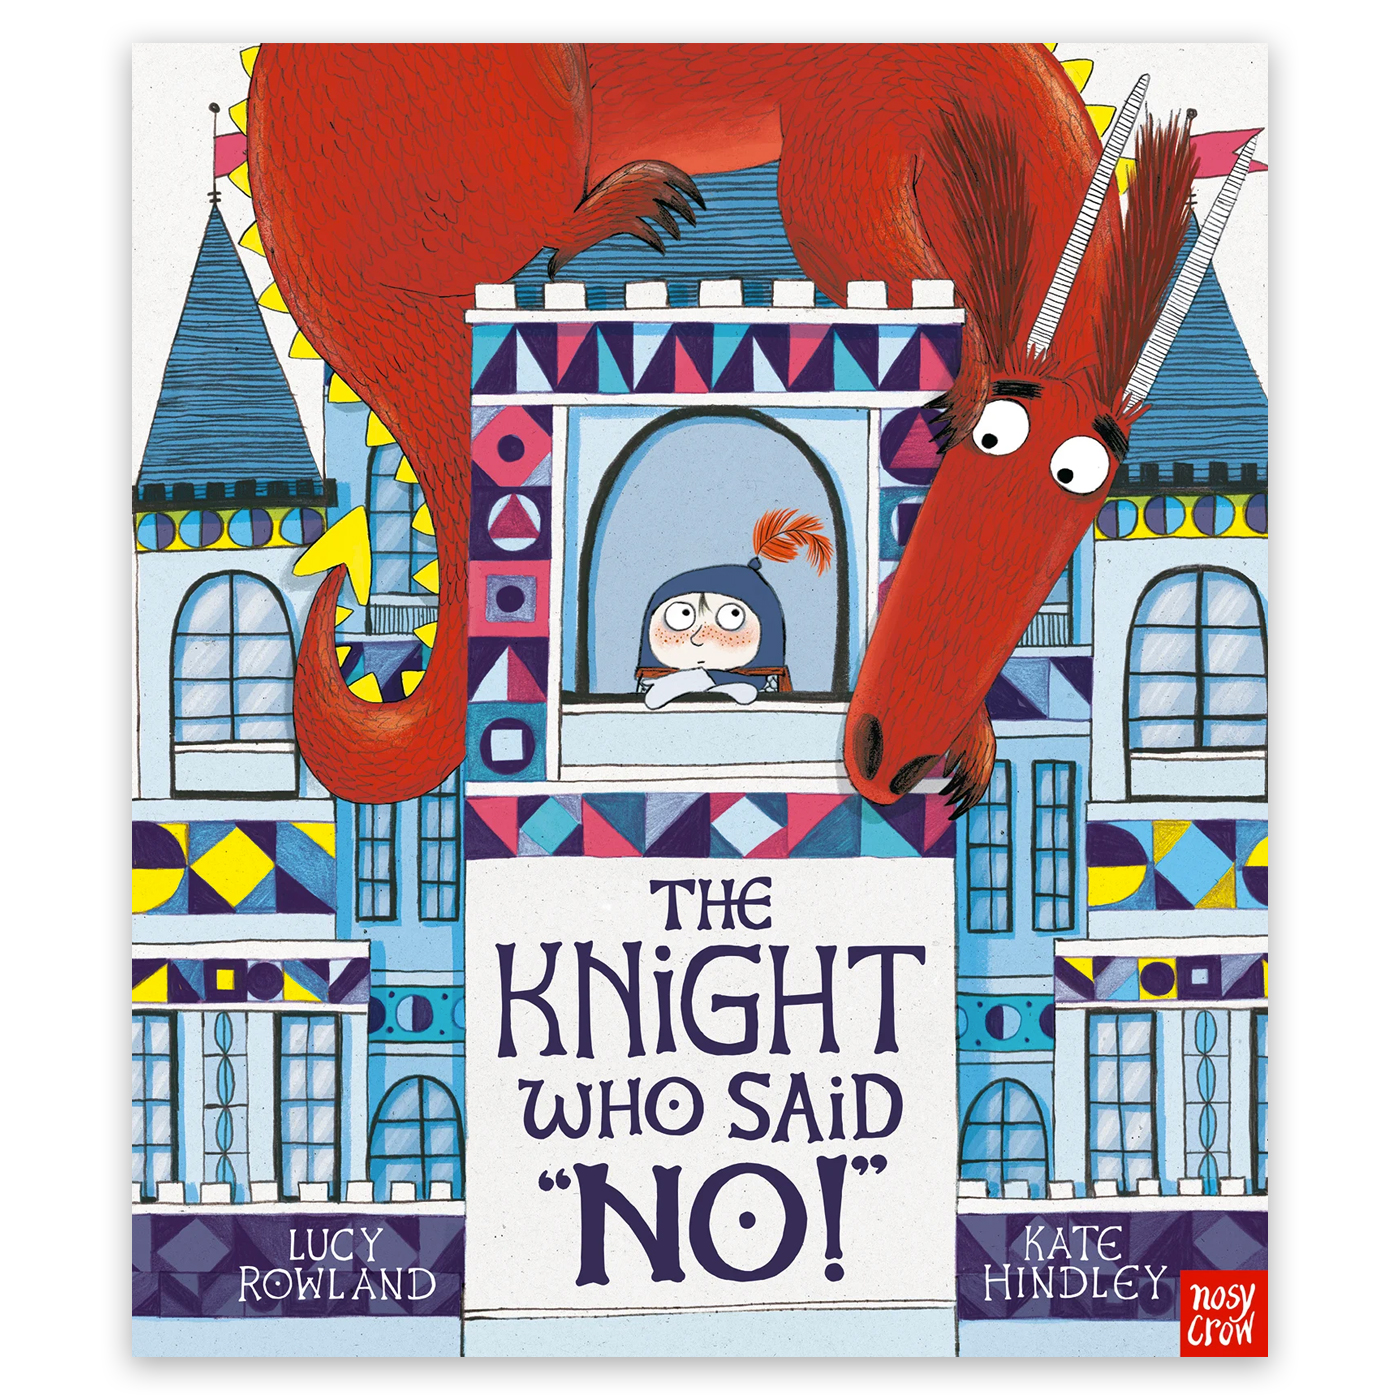  The Knight Who Said “No!”